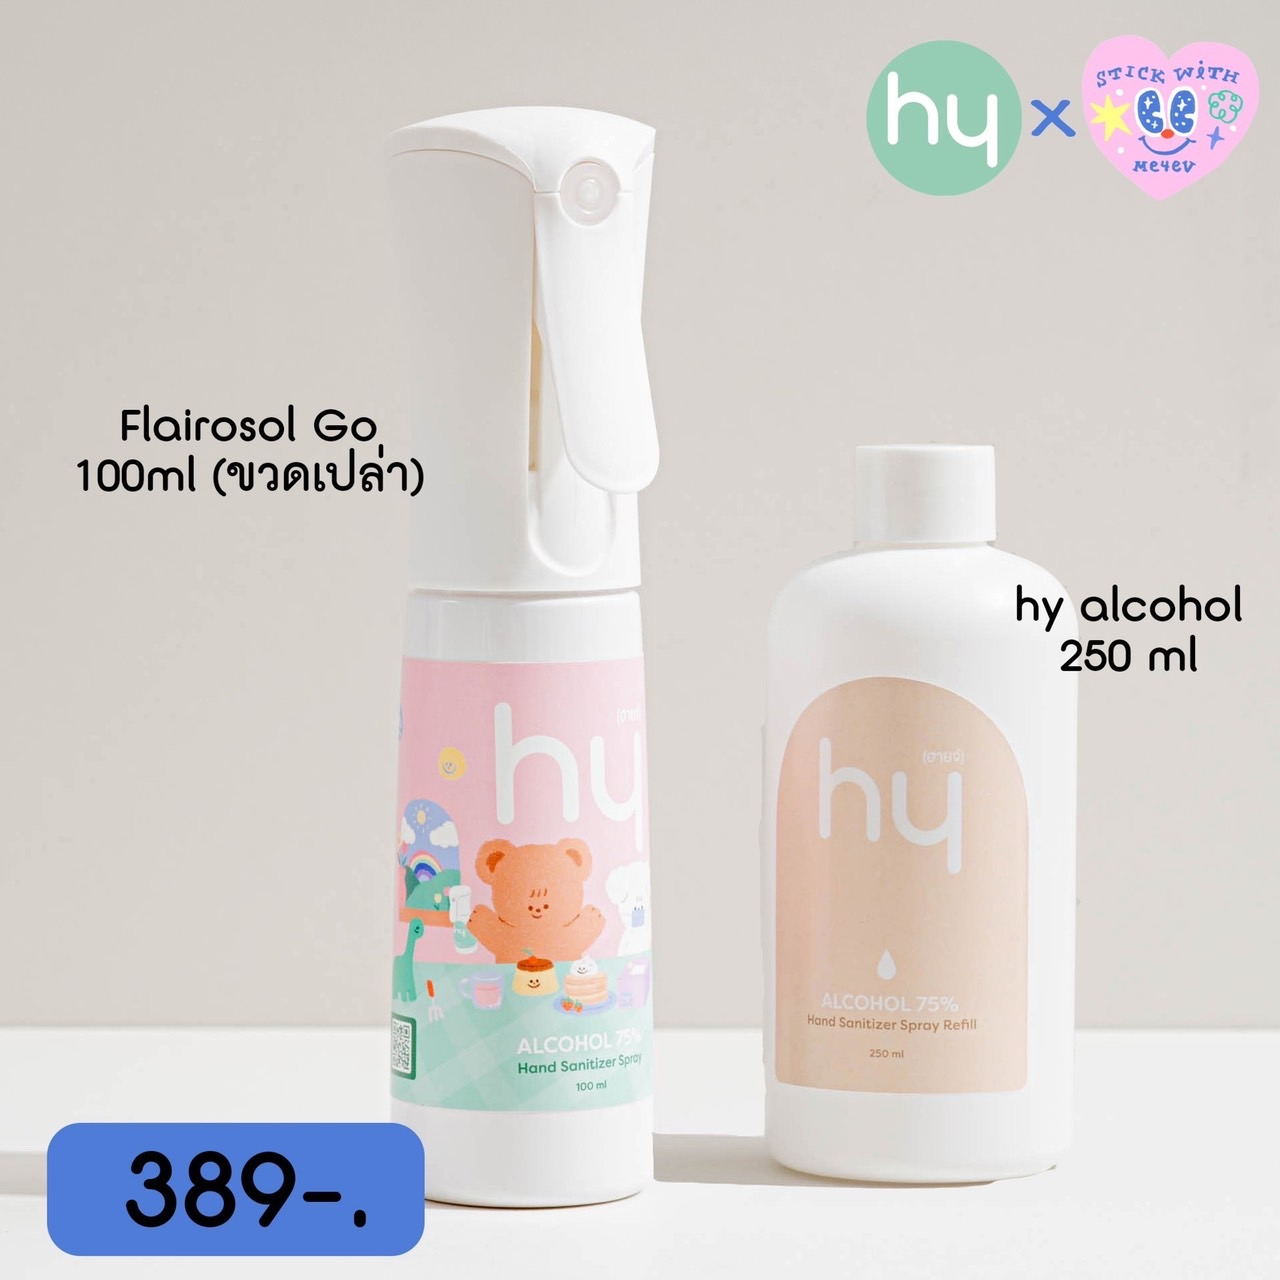 Mini Hy spray (100ml) x stickwithme4ev 75% alcohol FOOD GRADE